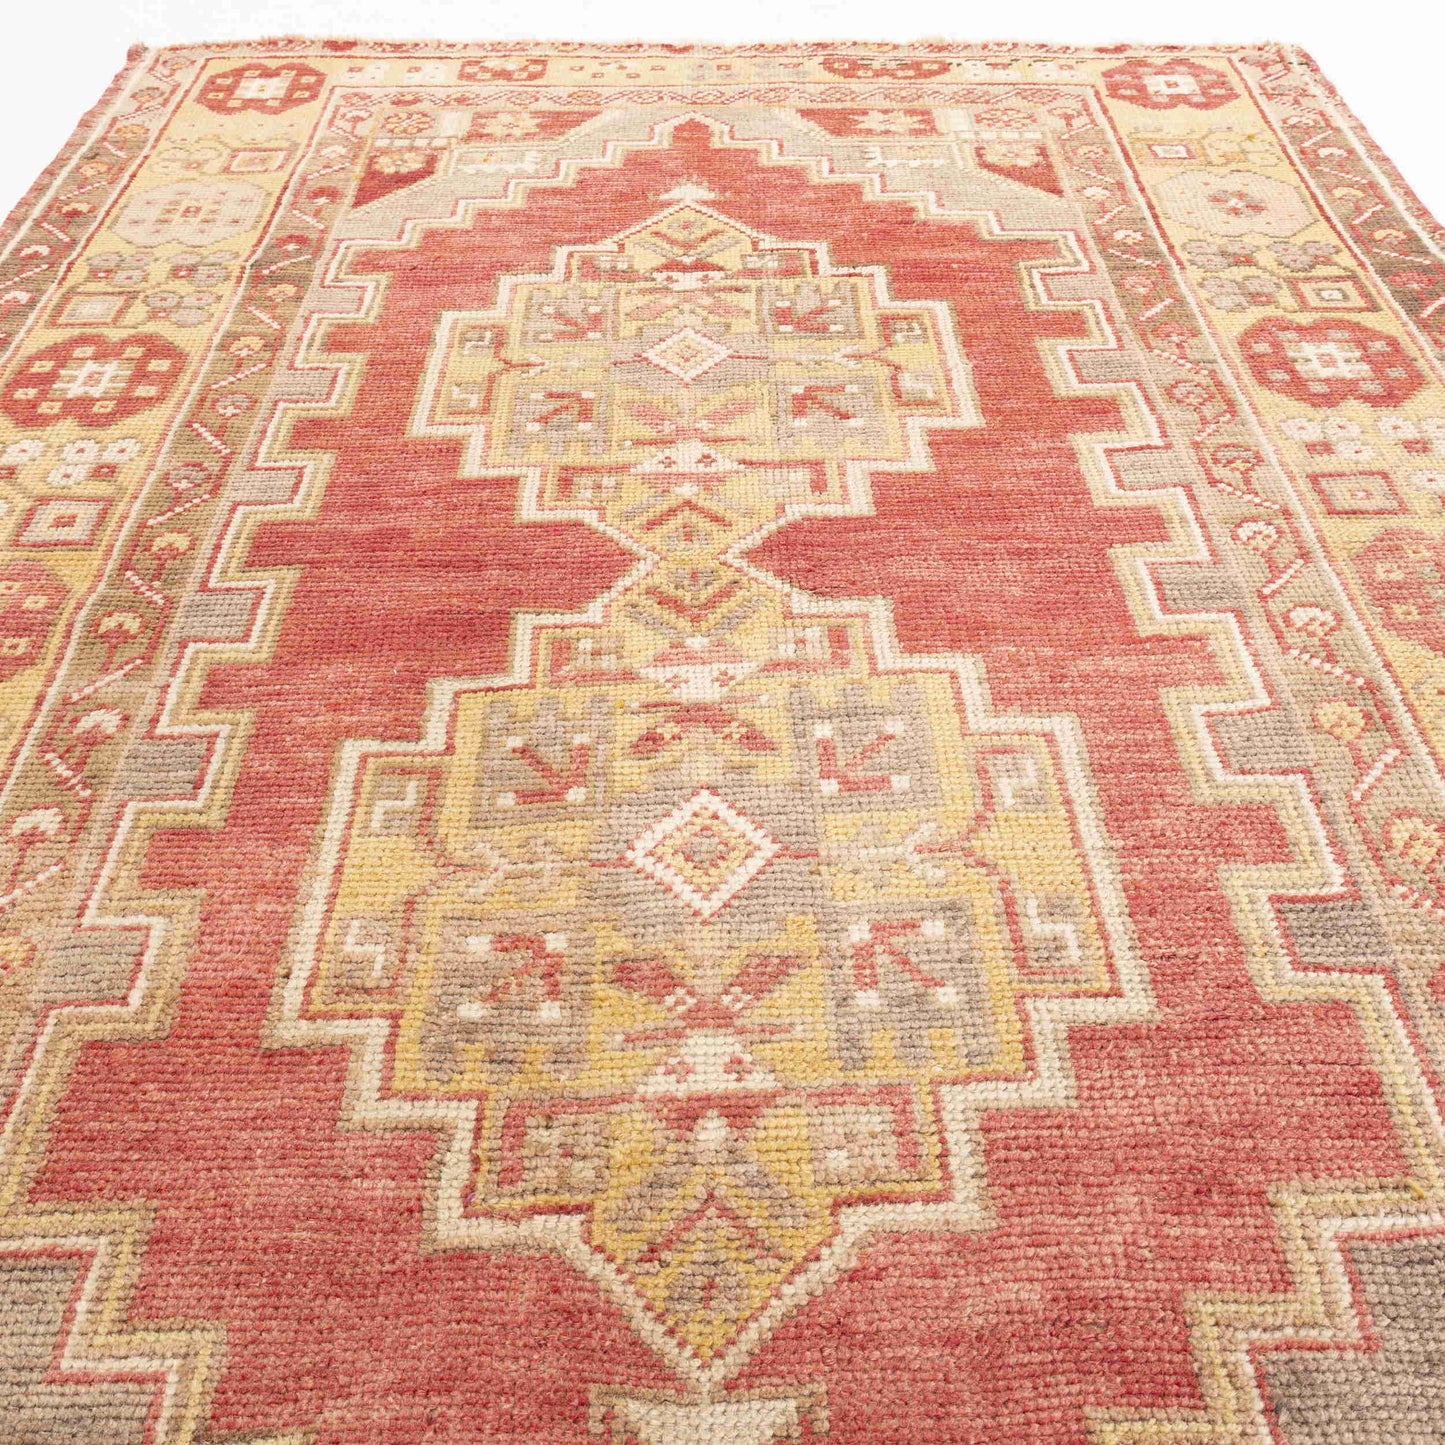 Oriental Rug Anatolian Handmade Wool On Wool 113 X 174 Cm - 3' 9'' X 5' 9'' Red C014 ER01